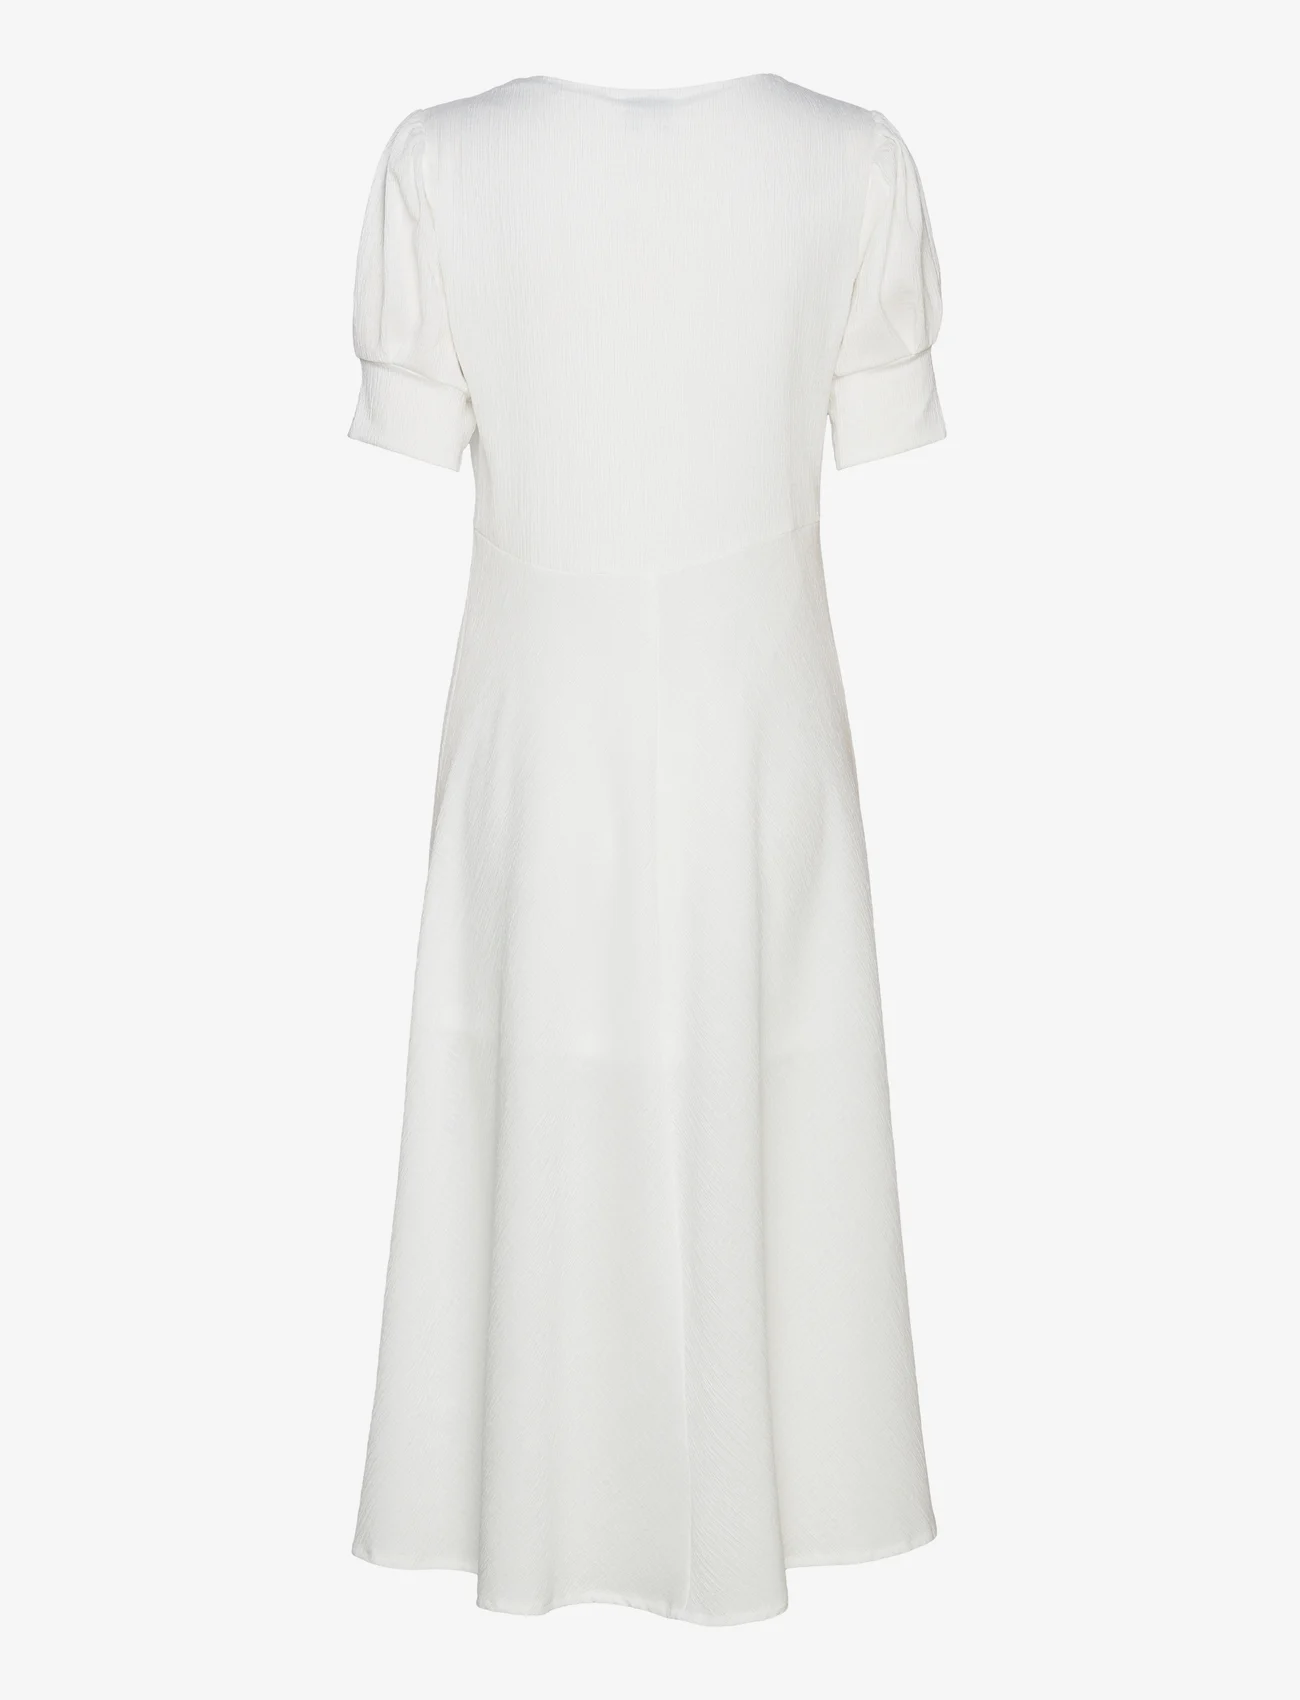 Noella - Mella Dress - summer dresses - offwhite - 1